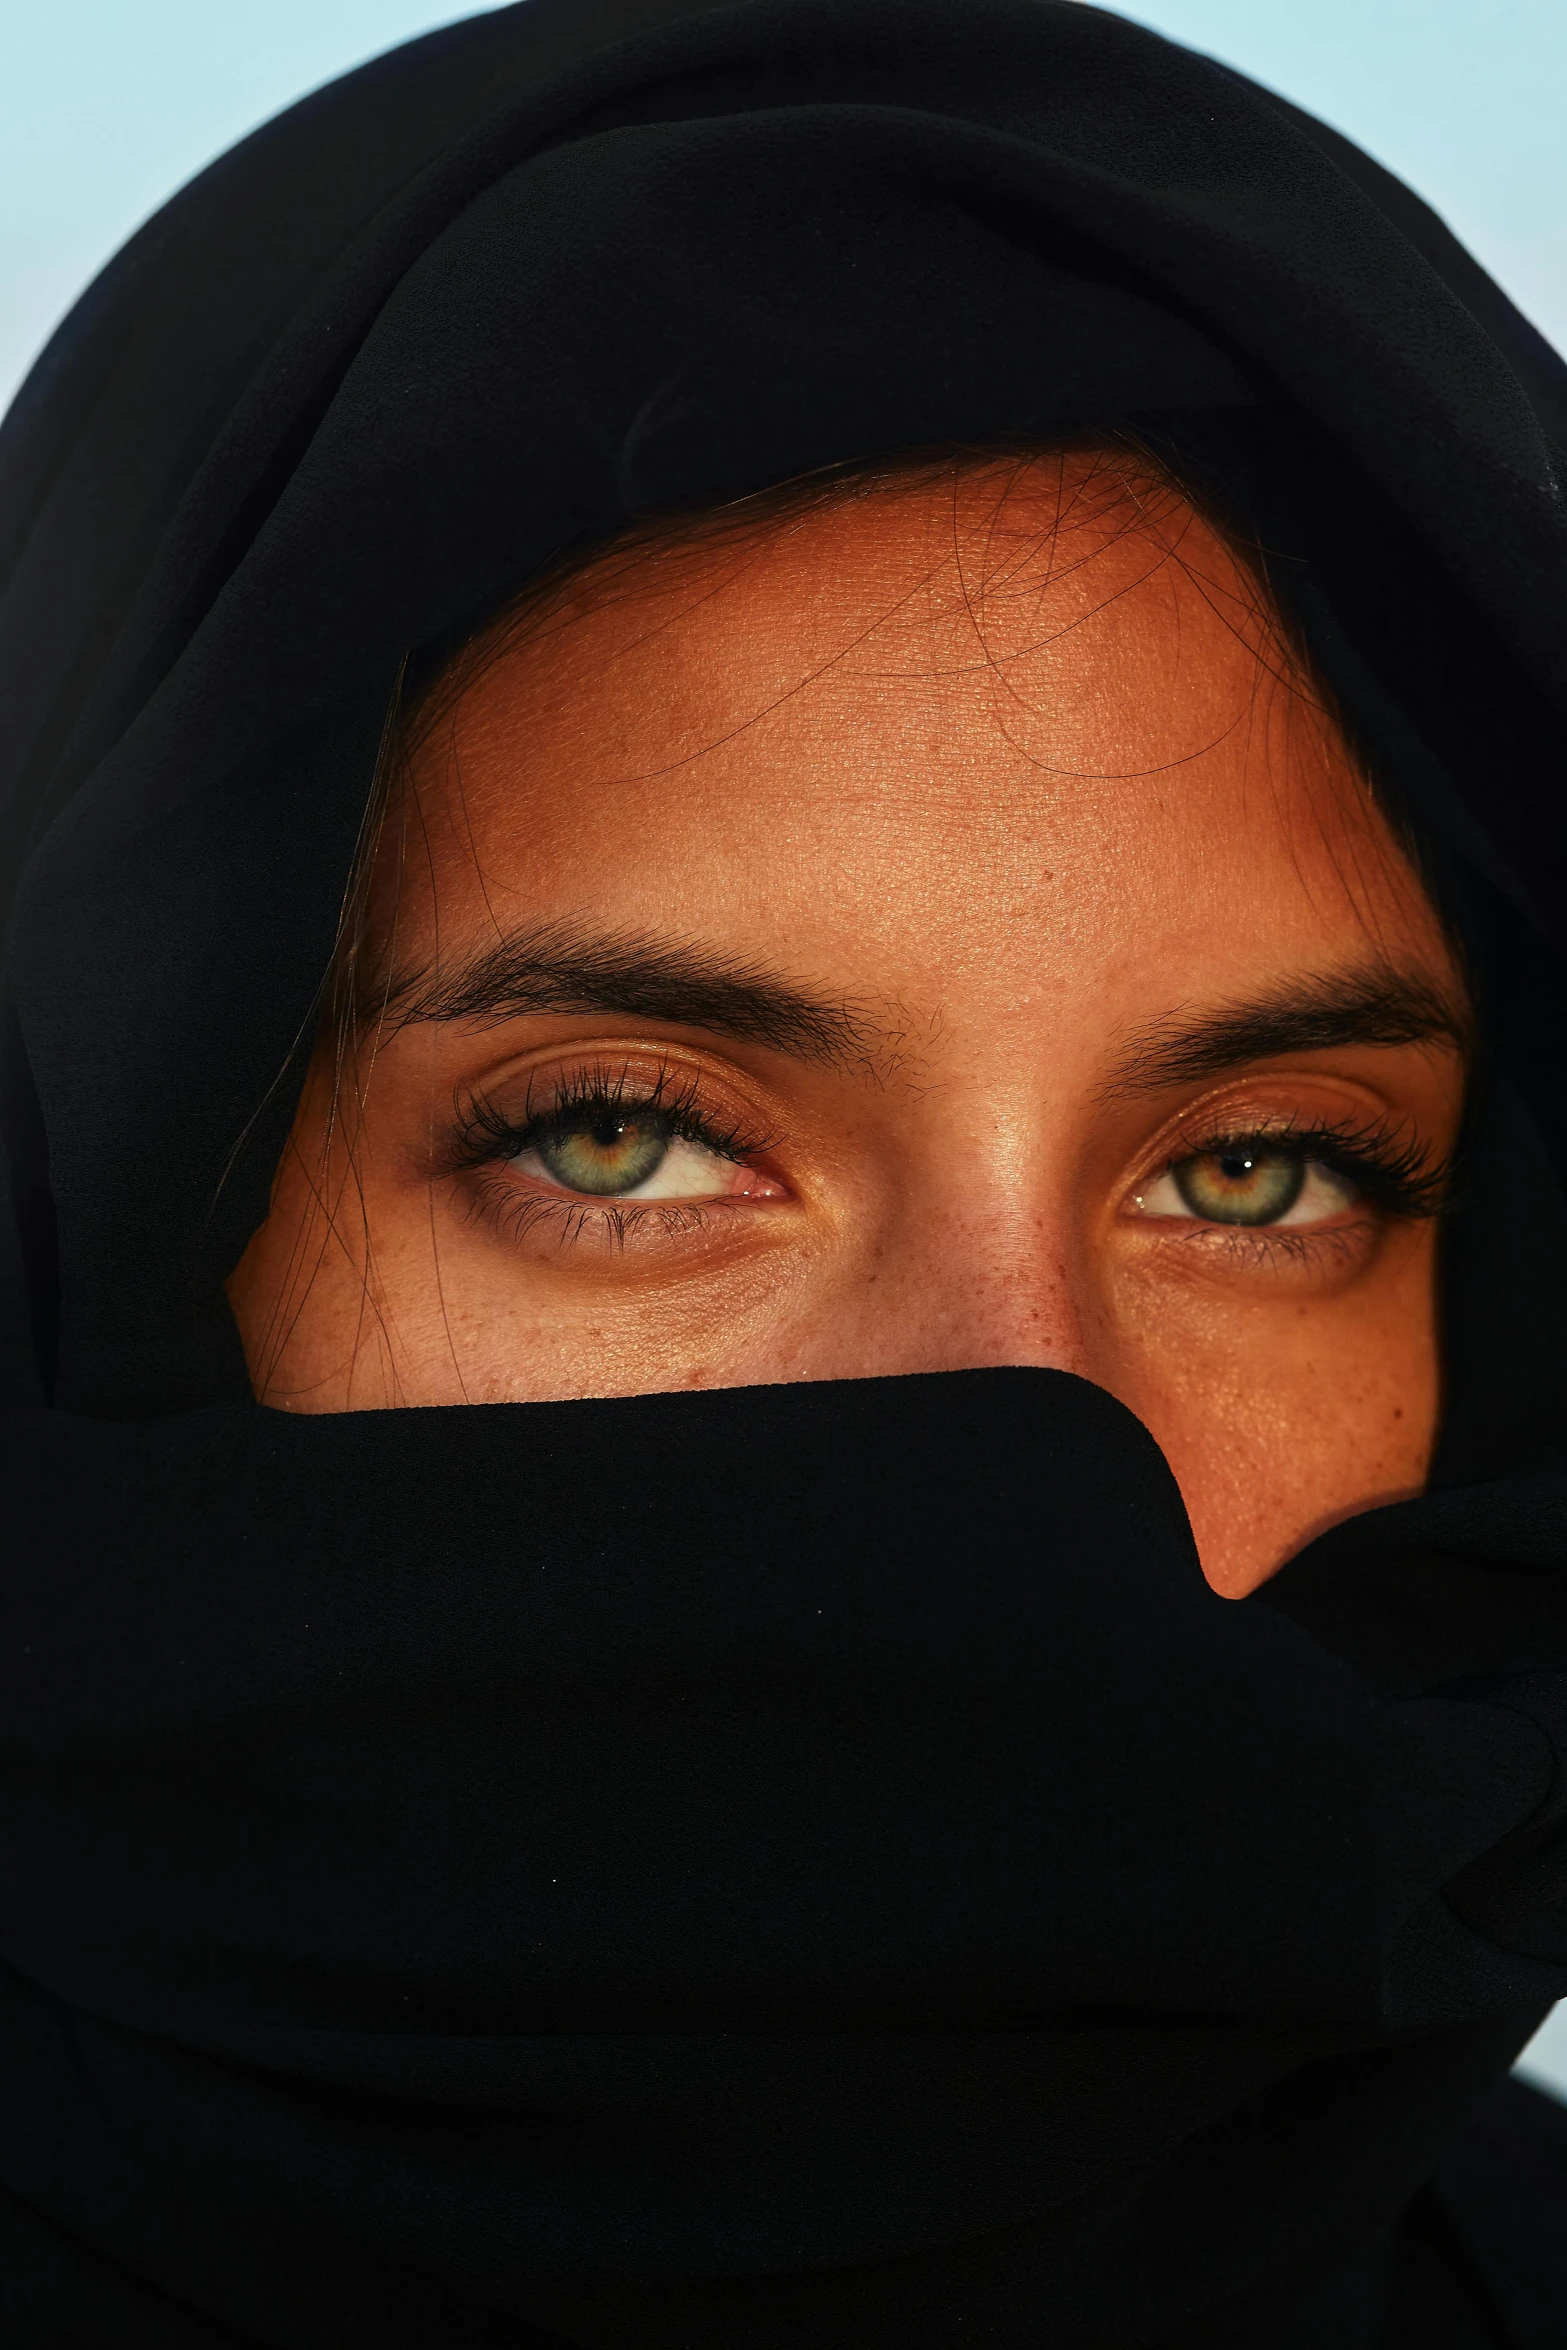 a close up po of an arabic woman wearing a black headscarf